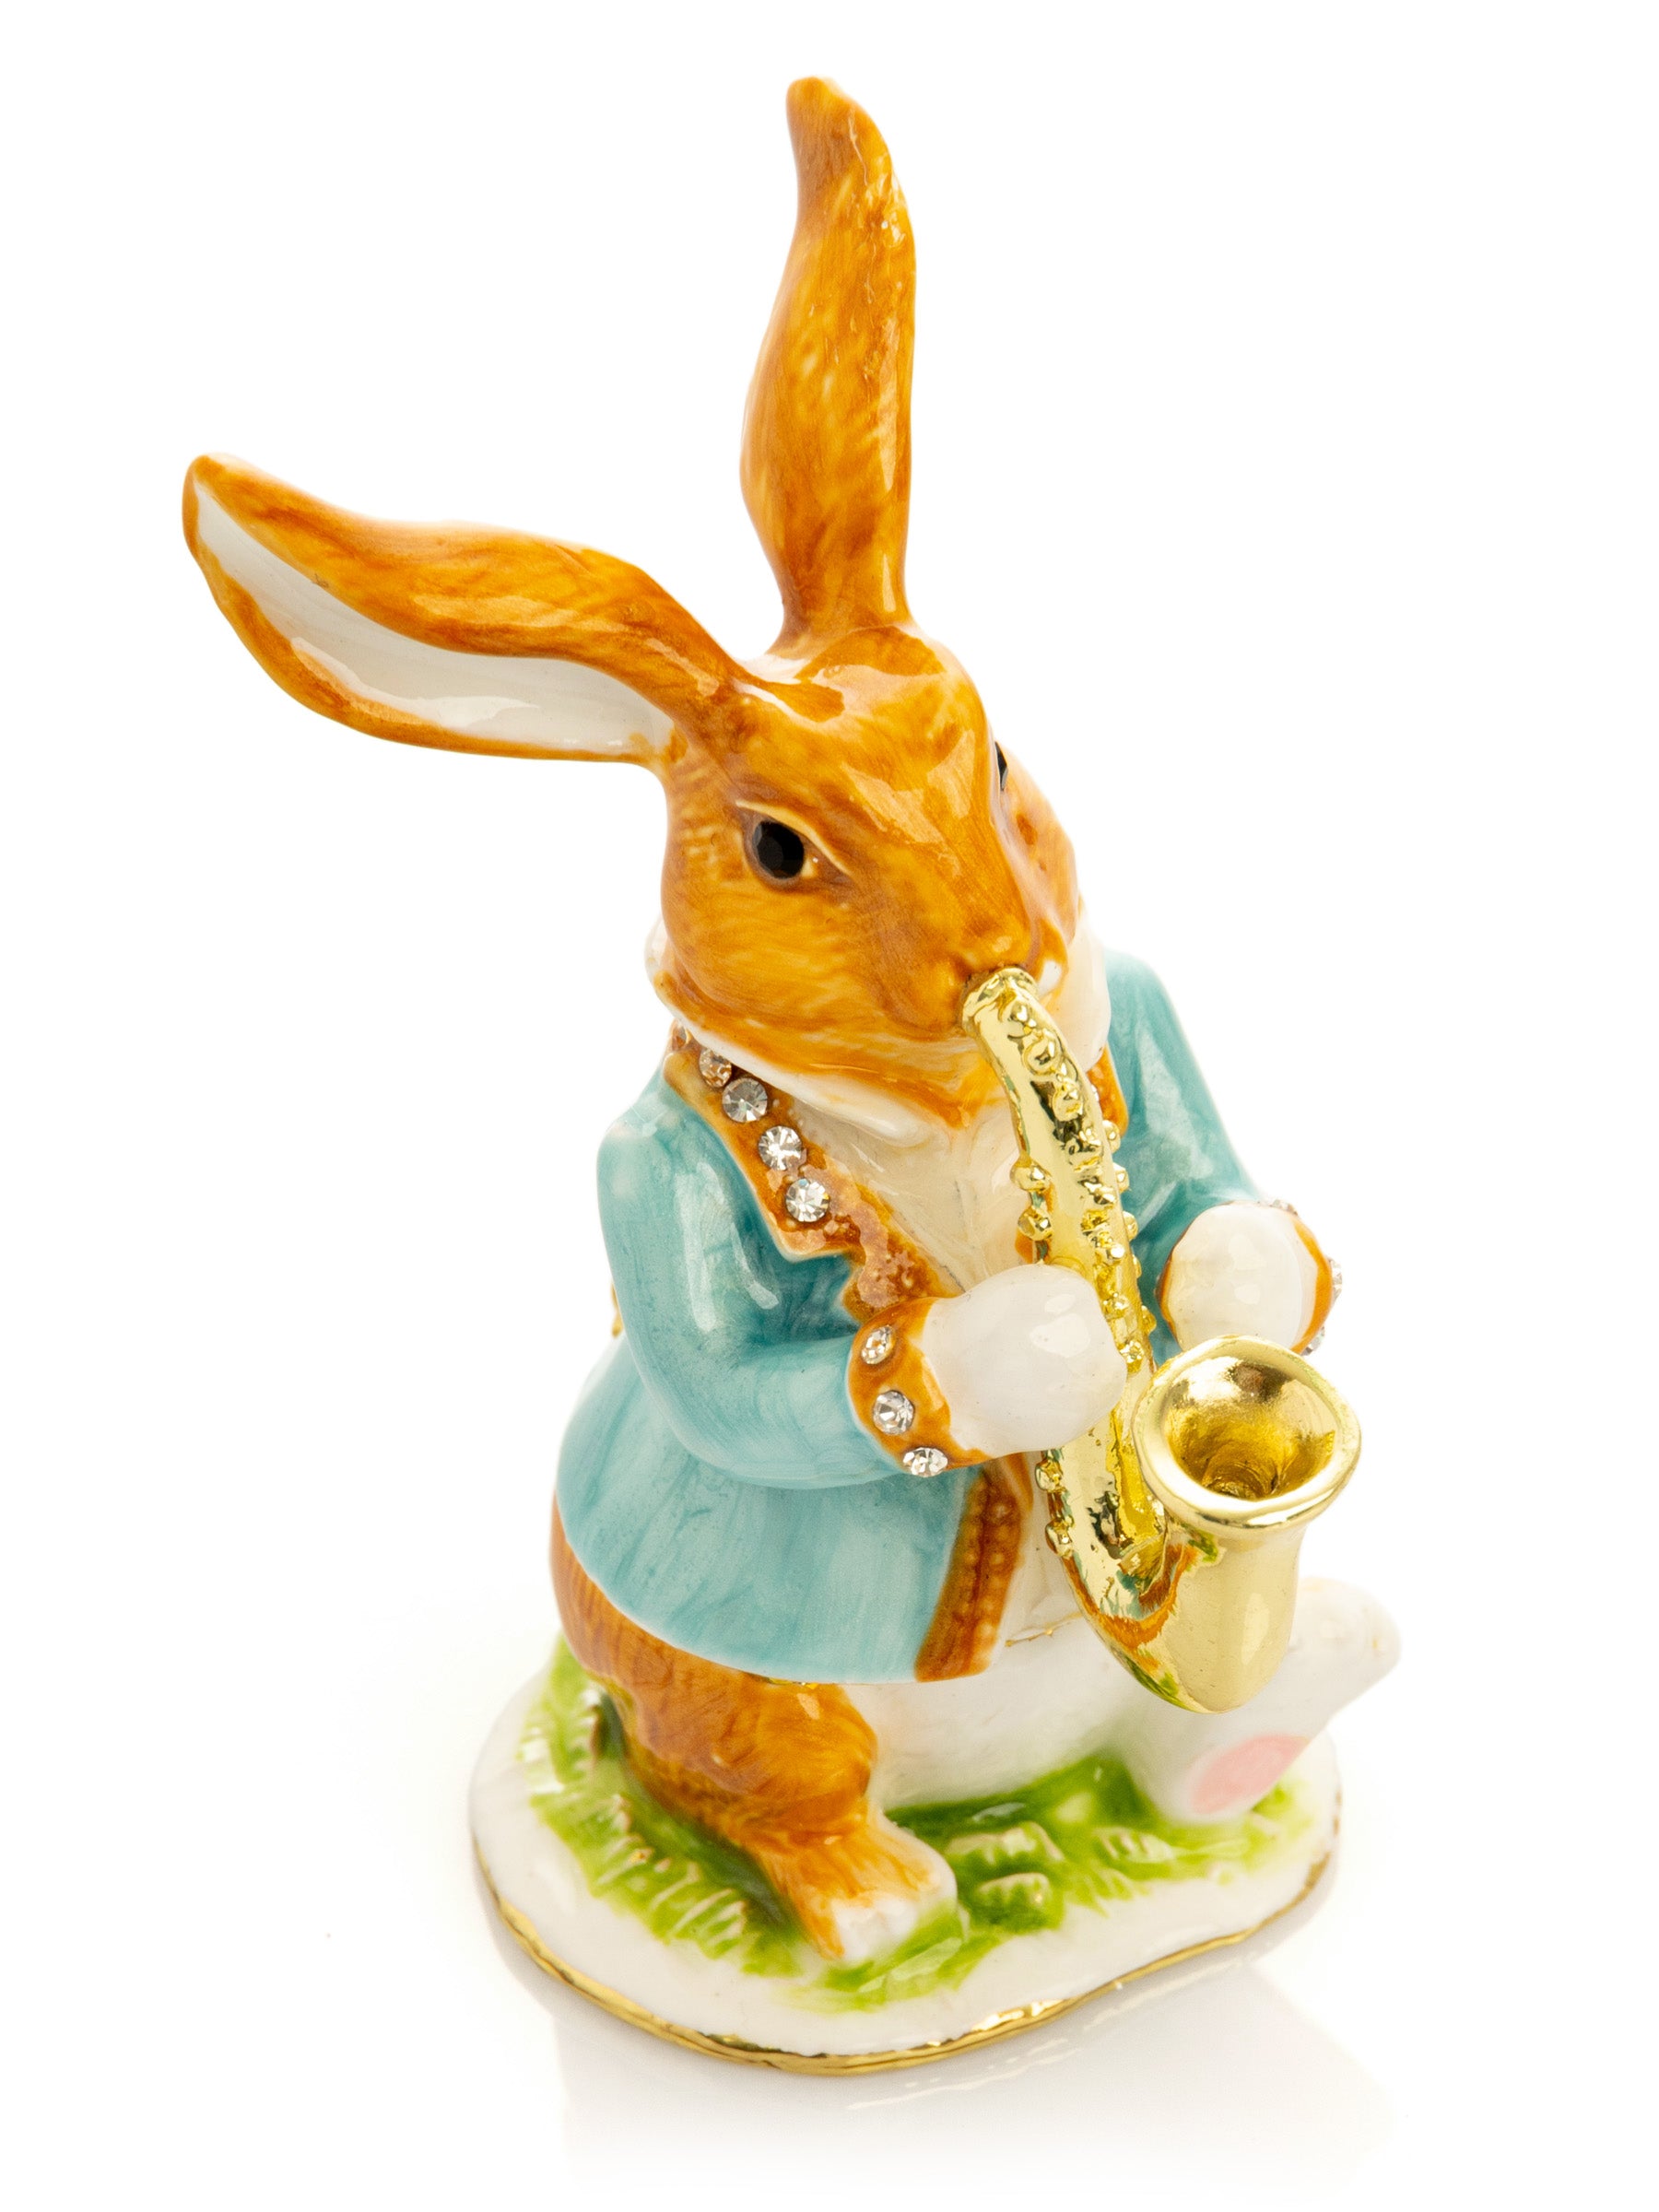 Rabbit playing the saxophone trinket box